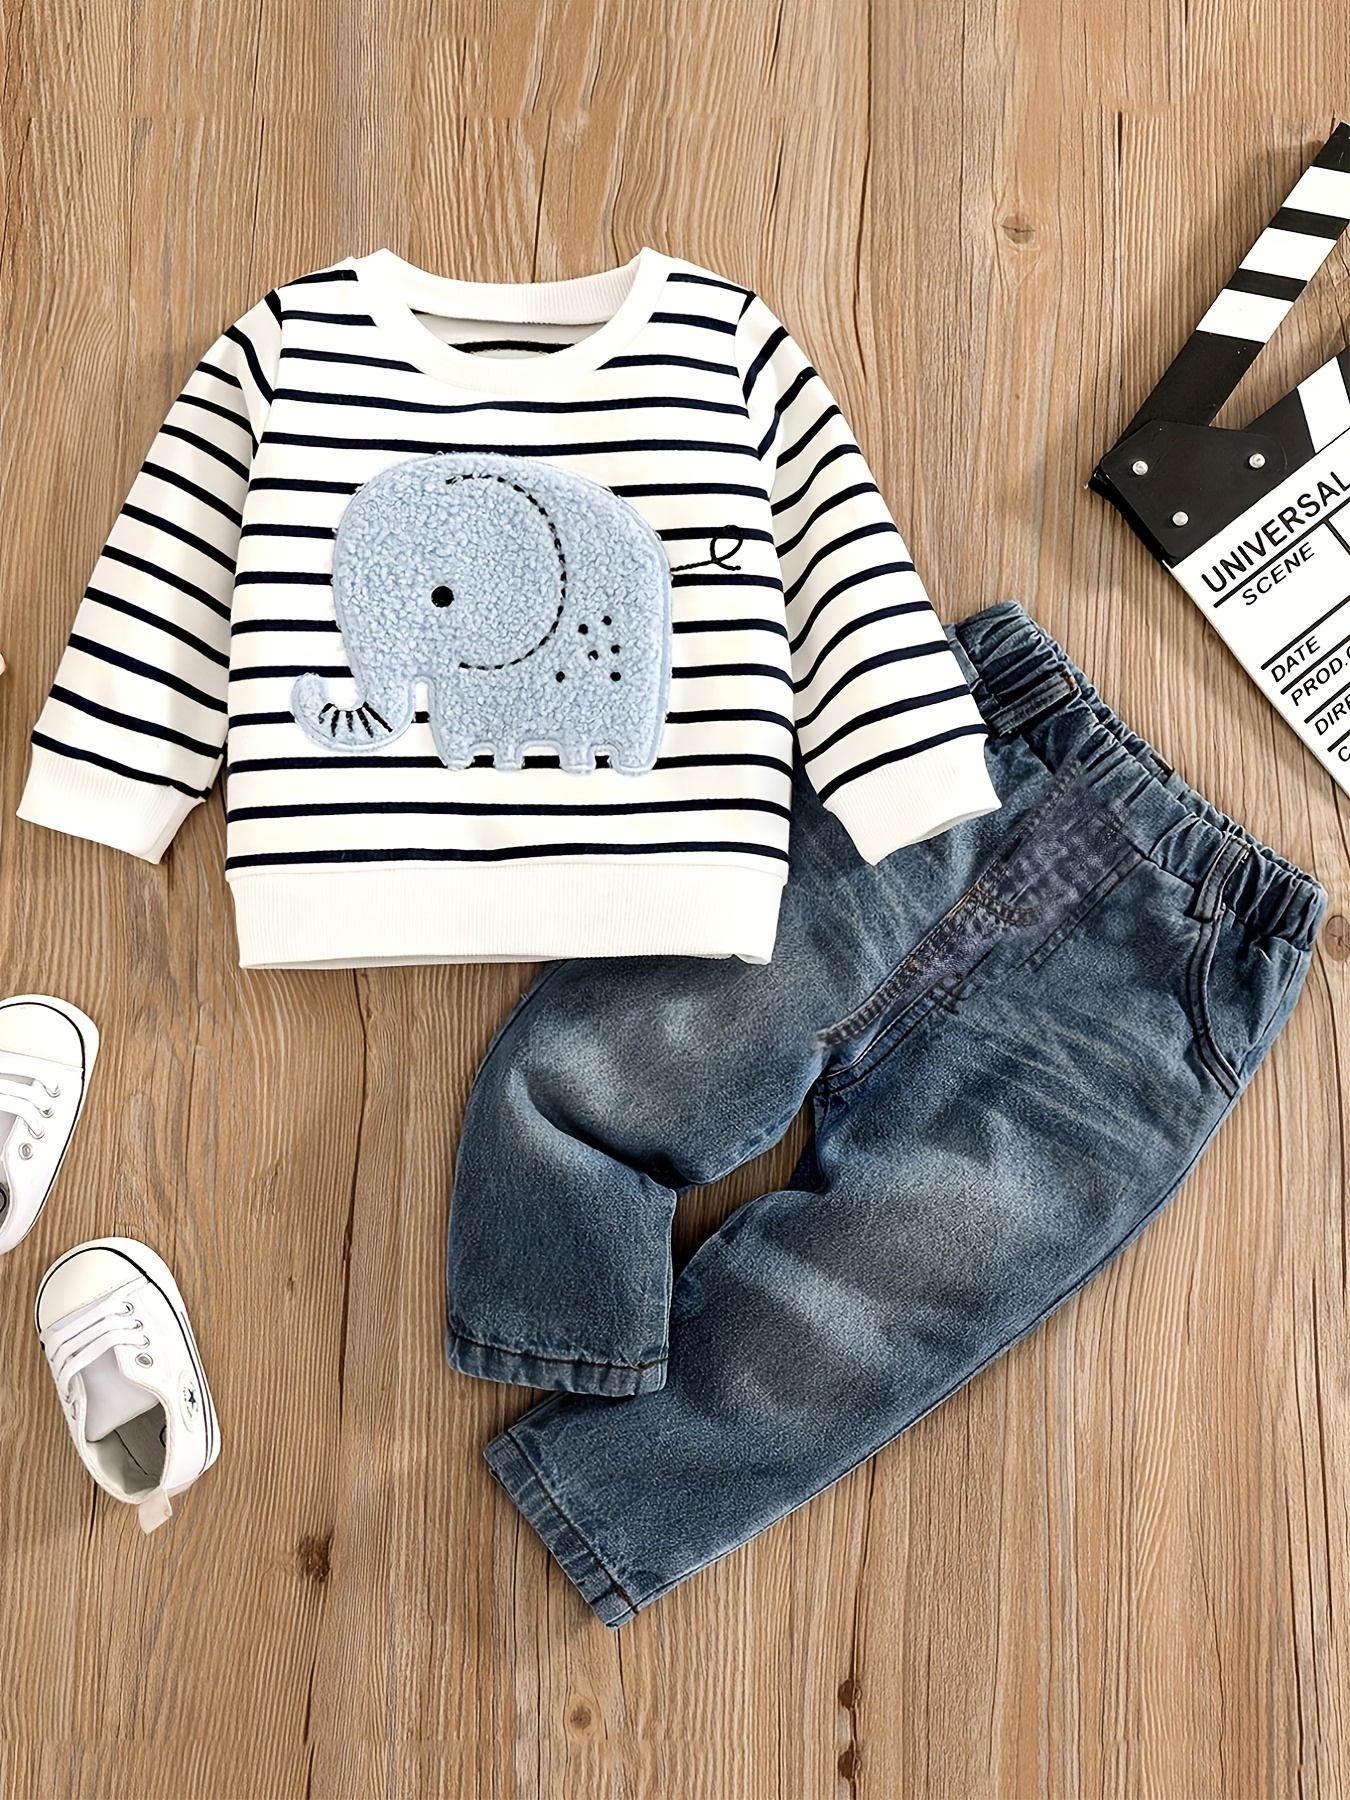 New 2pcs Toddler Kids Baby Boy Infant T-shirt Top+Jeans Pants